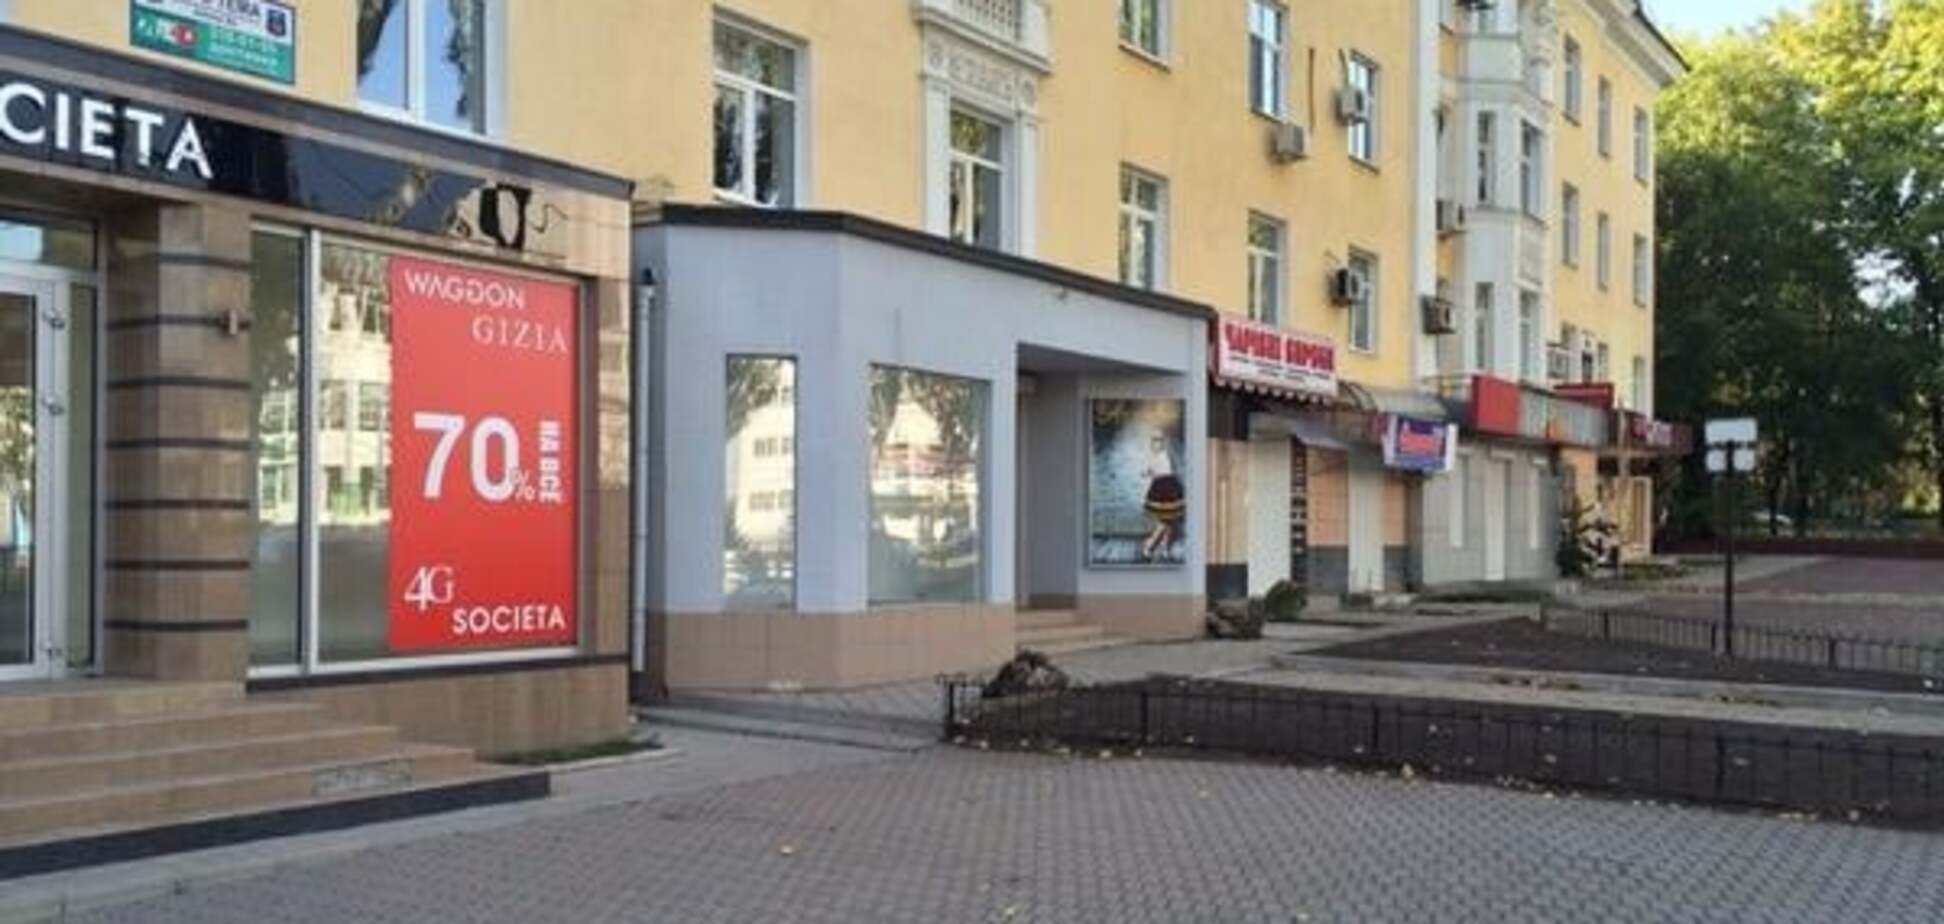 Чисто, пусто, дорого: в сети заглянули 'за поребрик' оккупированного Донецка. Фоторепортаж